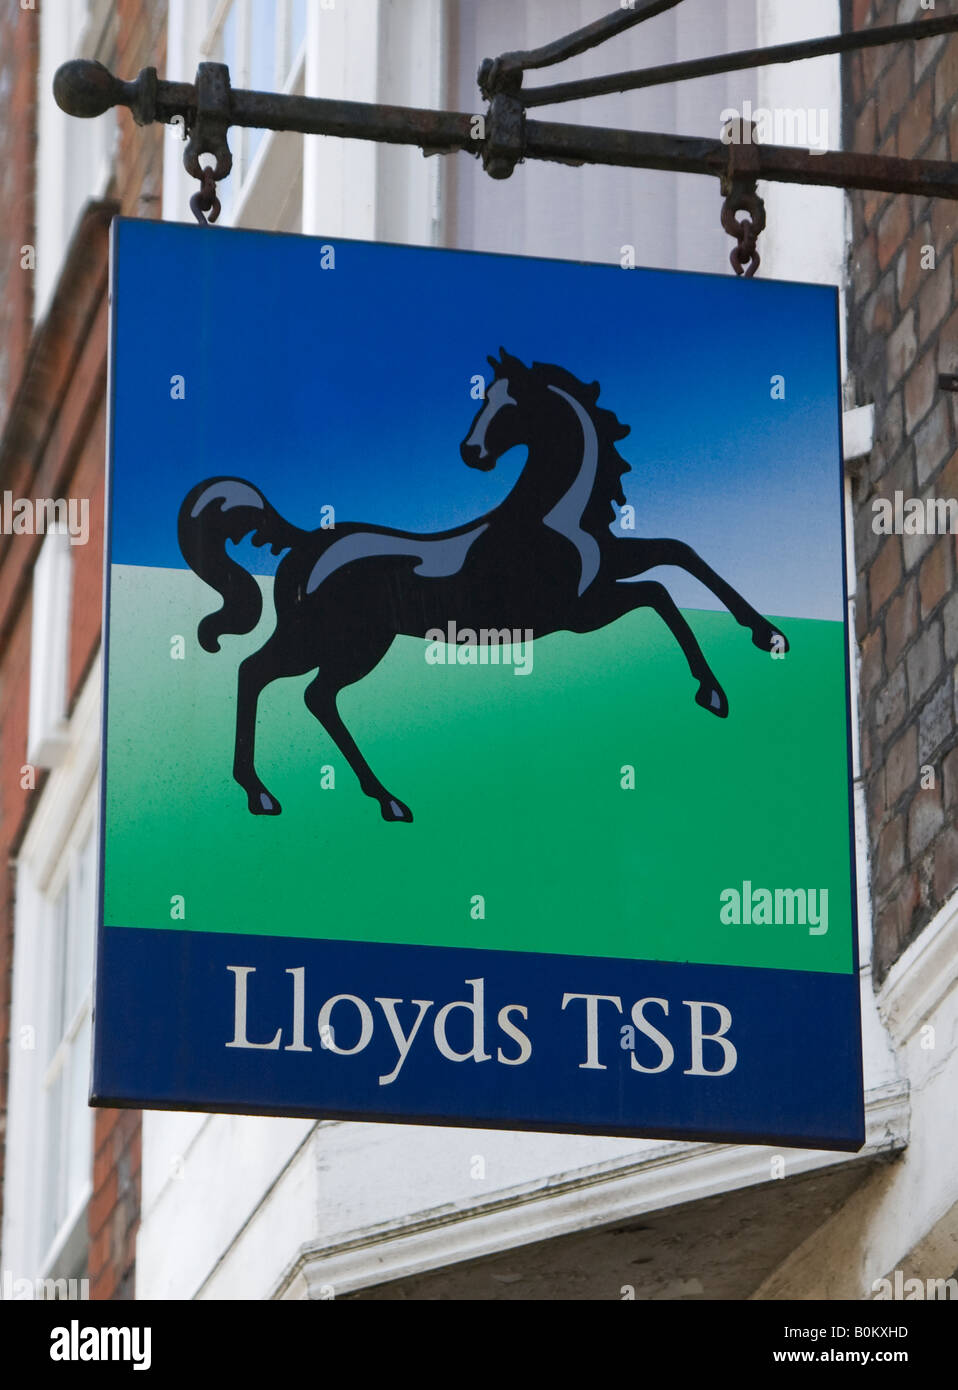 Lloyds TSB sign logo Stock Photo